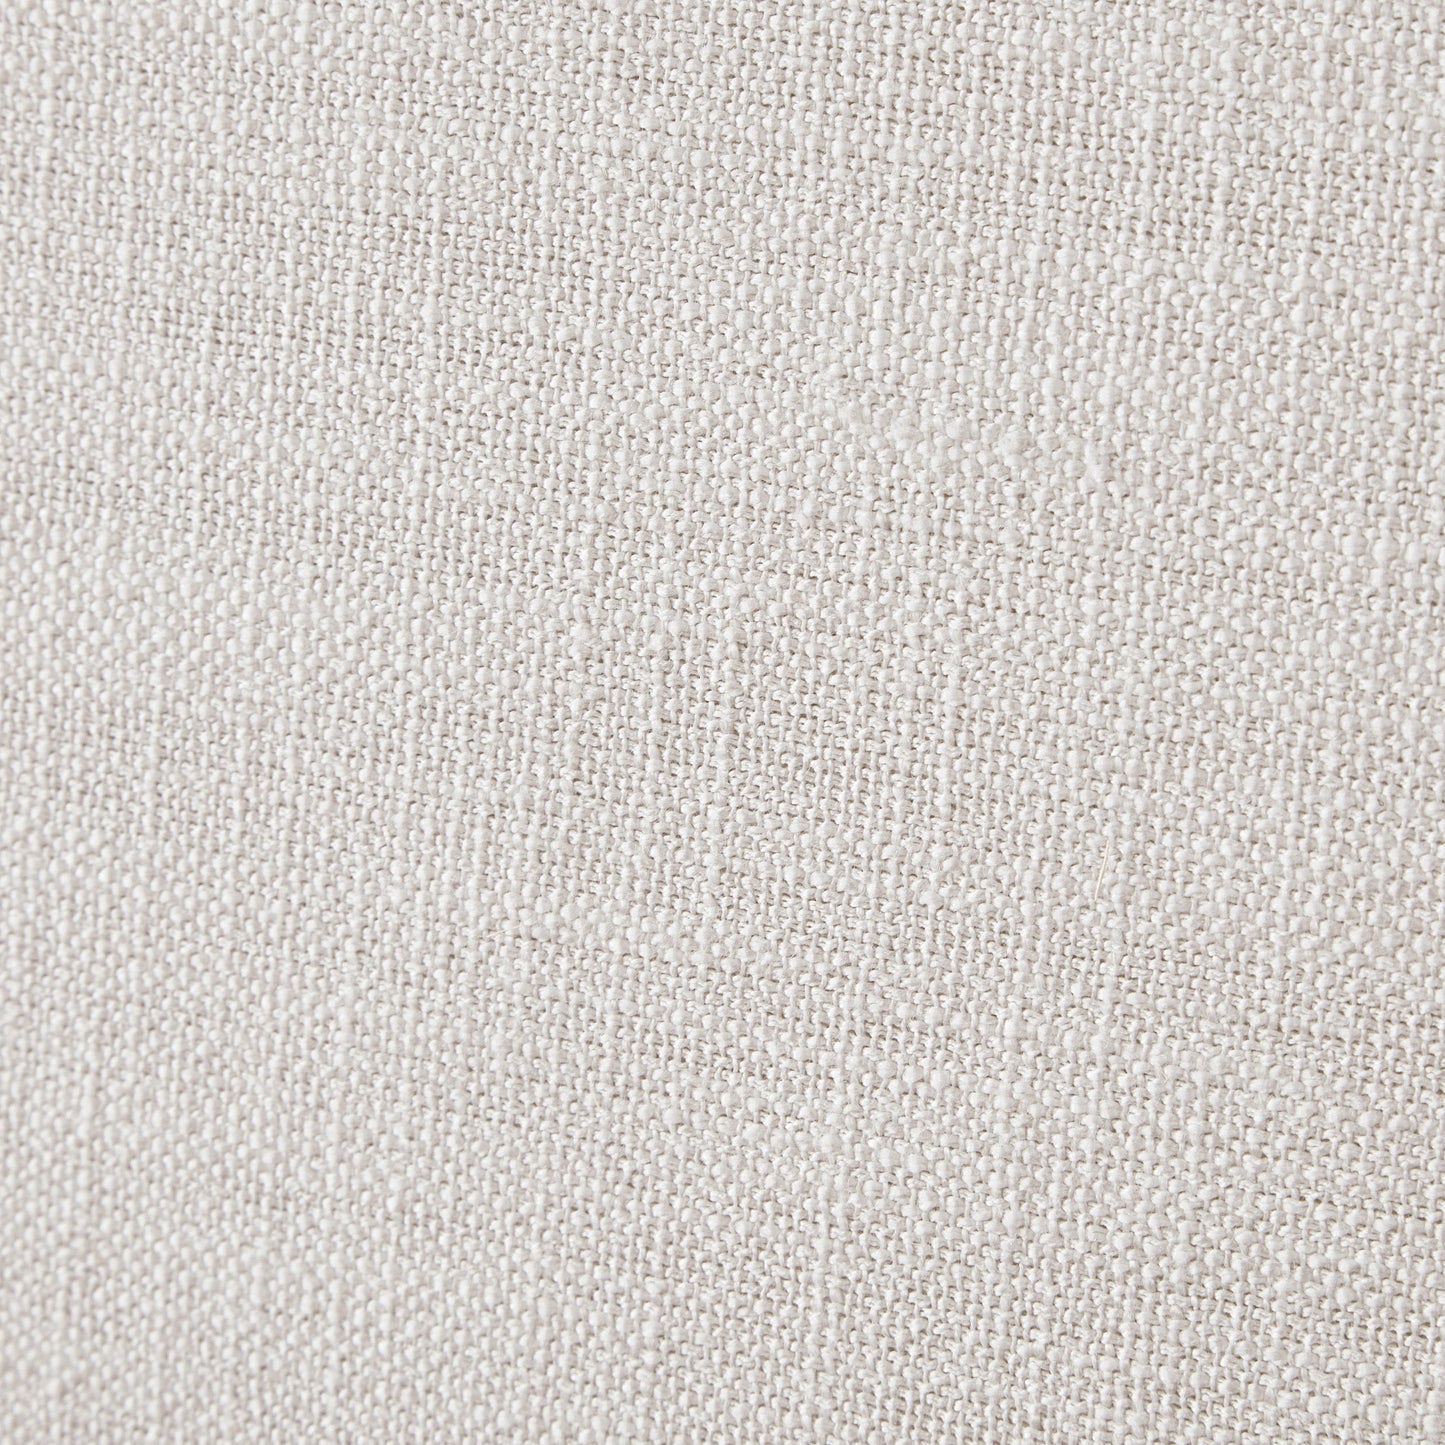 mason cream linen textured fabric queen bed (3 boxes) q